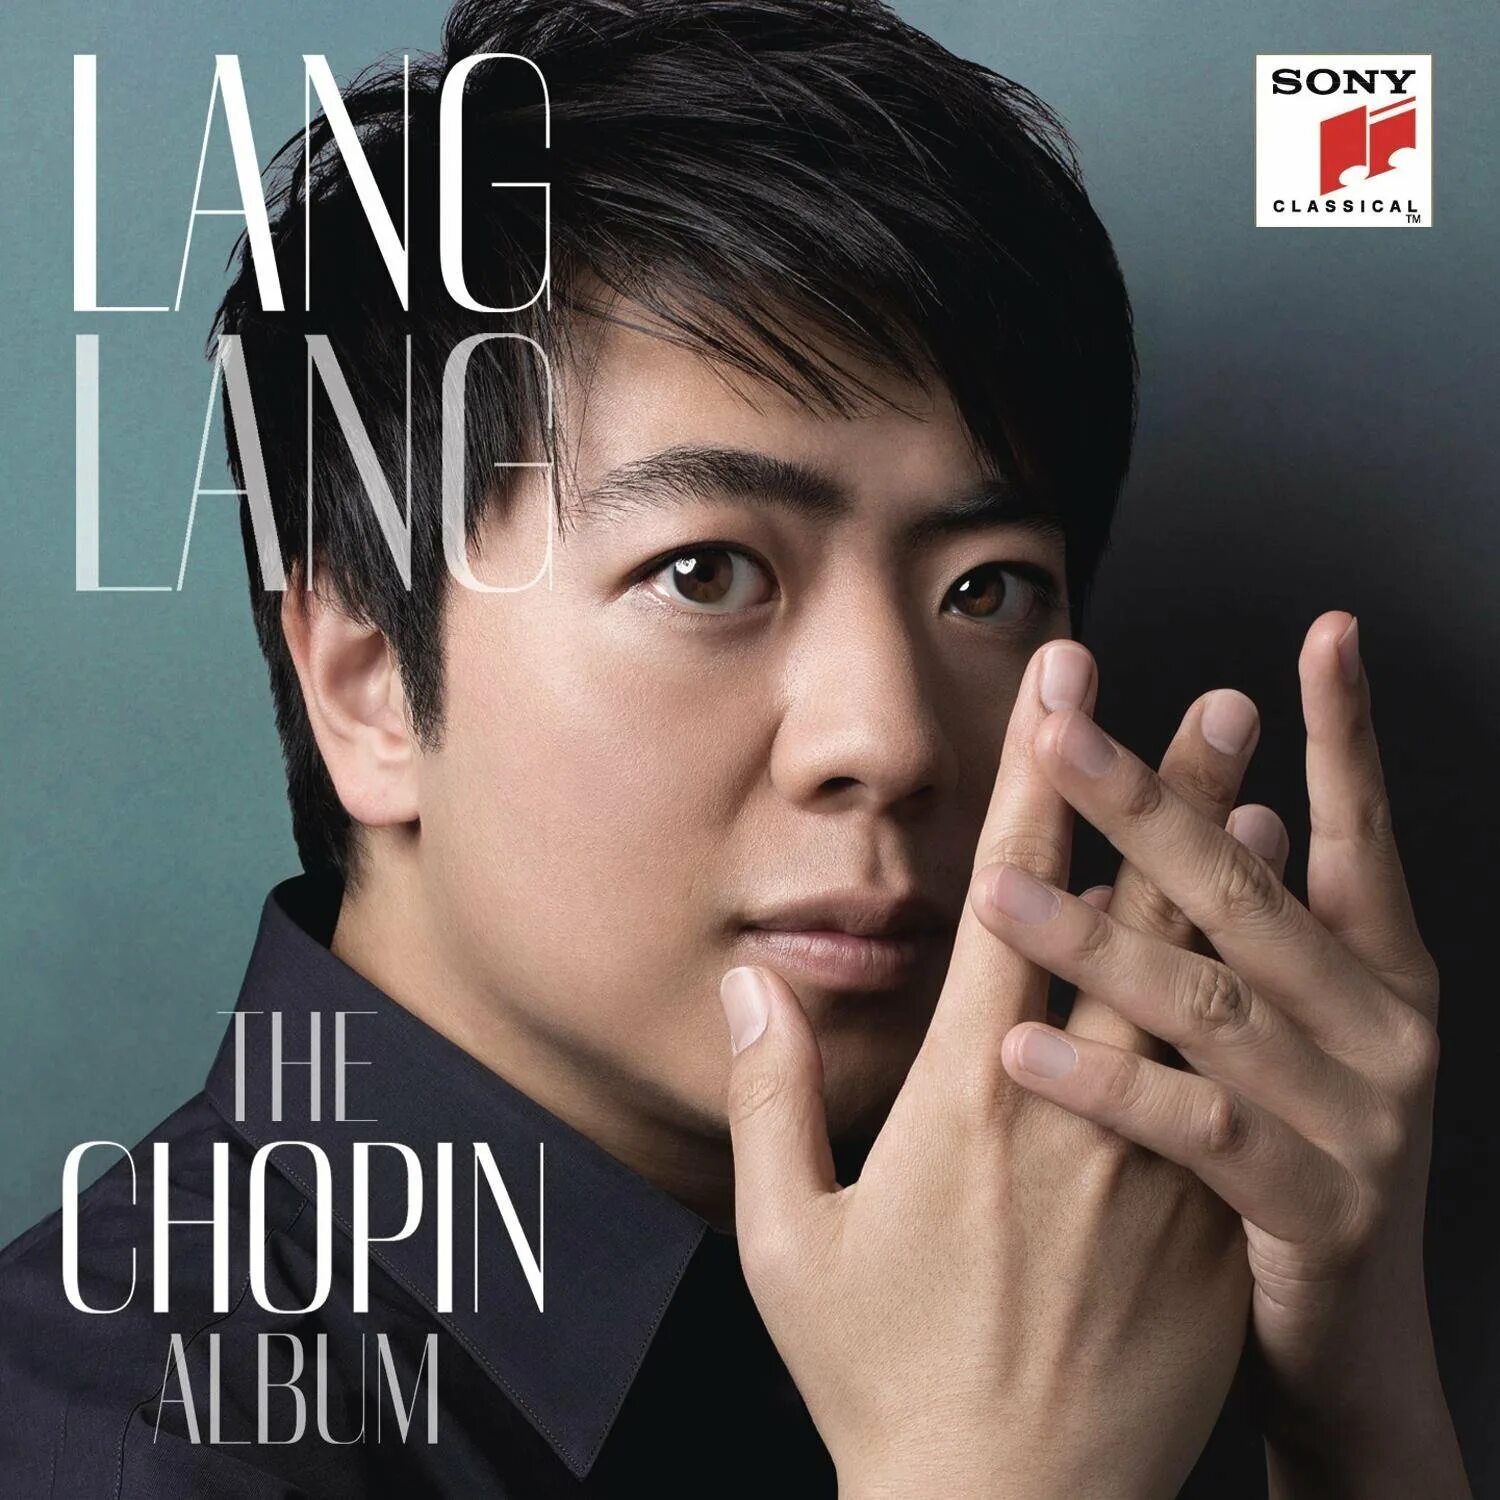 Ланг Ланг. Шопен Ланг Ланг. Lang lang альбом. Китайский пианист Ланг Ланг.